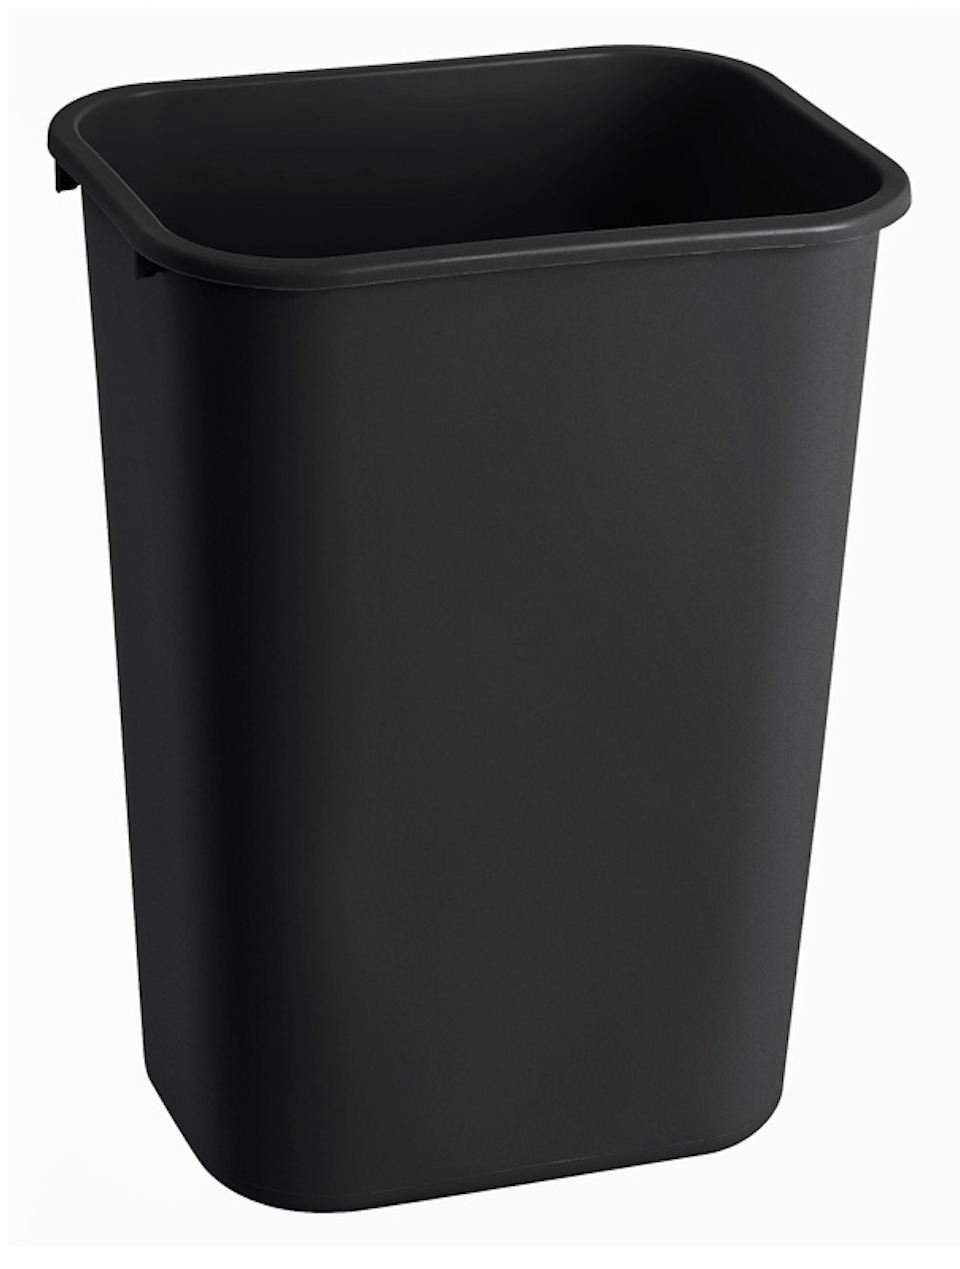 Rubbermaid rechteckiger Abfallbehälter | 39 Liter, HxBxT 50,5x27,9x38,7cm | Polyethylen | Schwarz